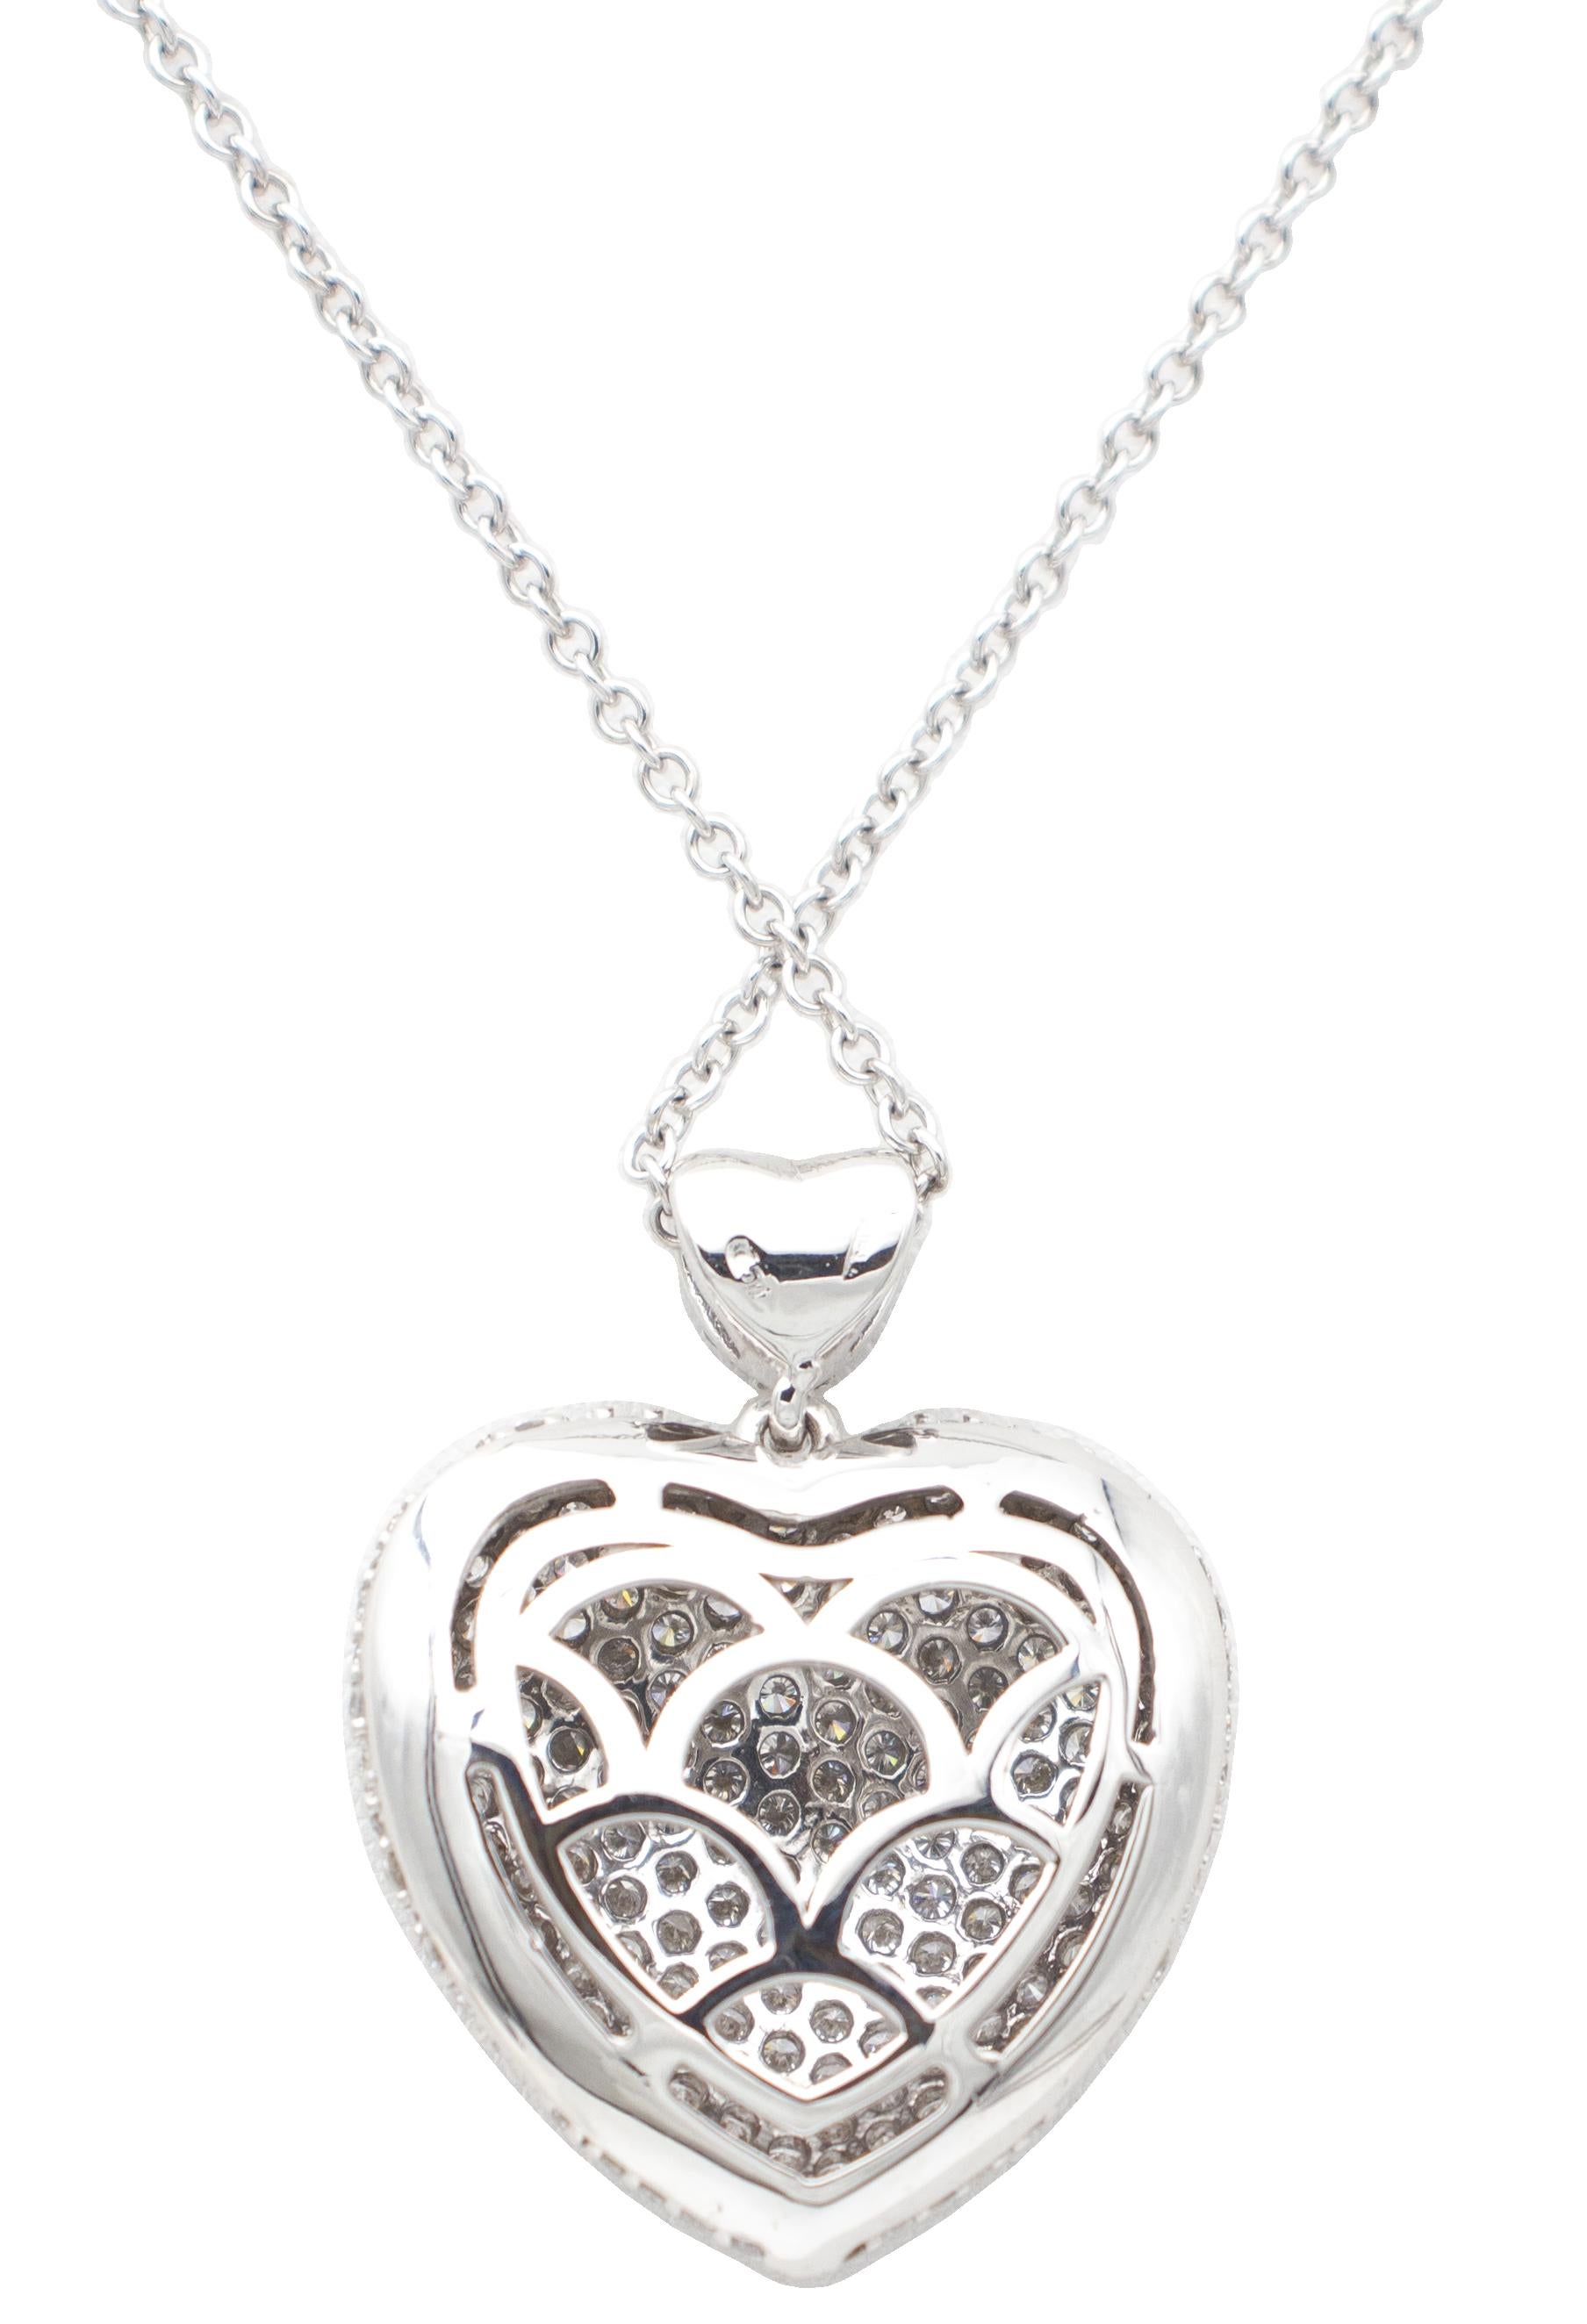 3.51 Ct White Diamonds, 18kt White Gold Heart Shape Pendant Necklace 1